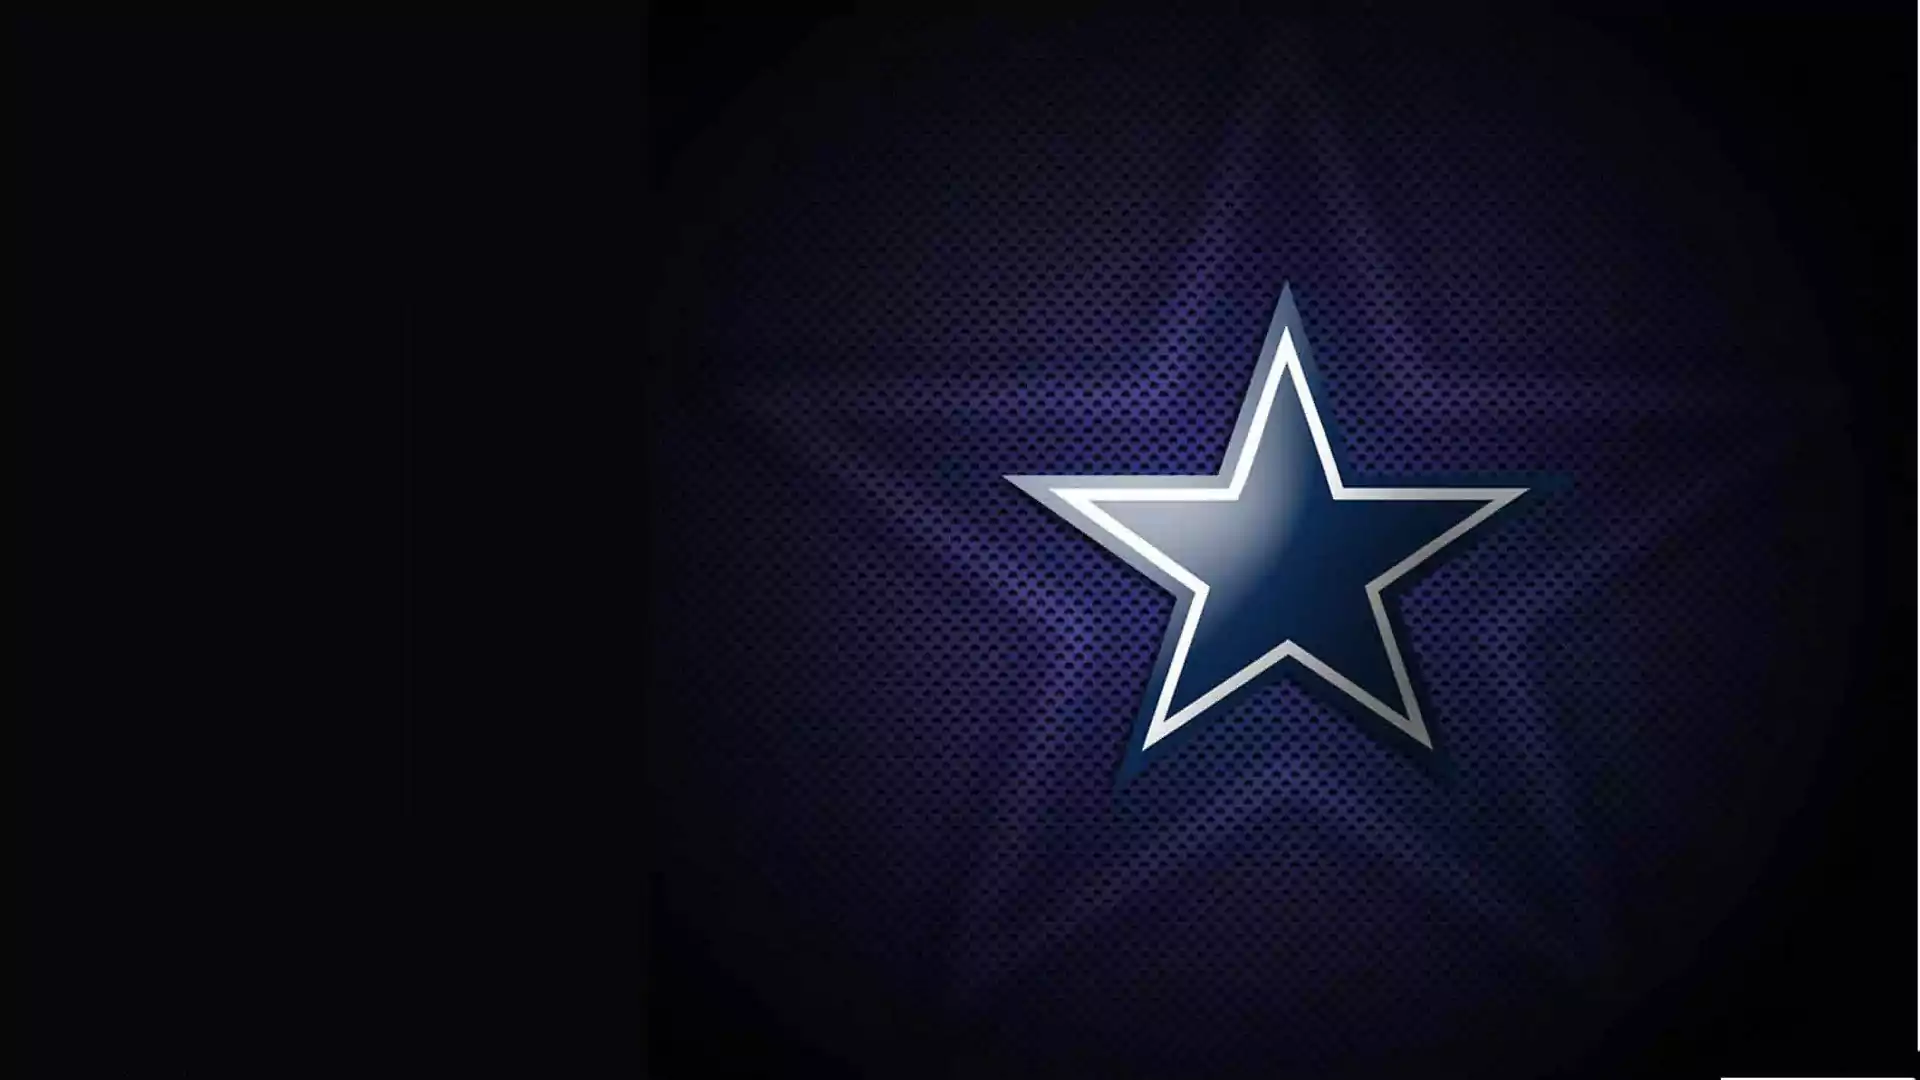 Dallas Cowboys HD Wallpaper